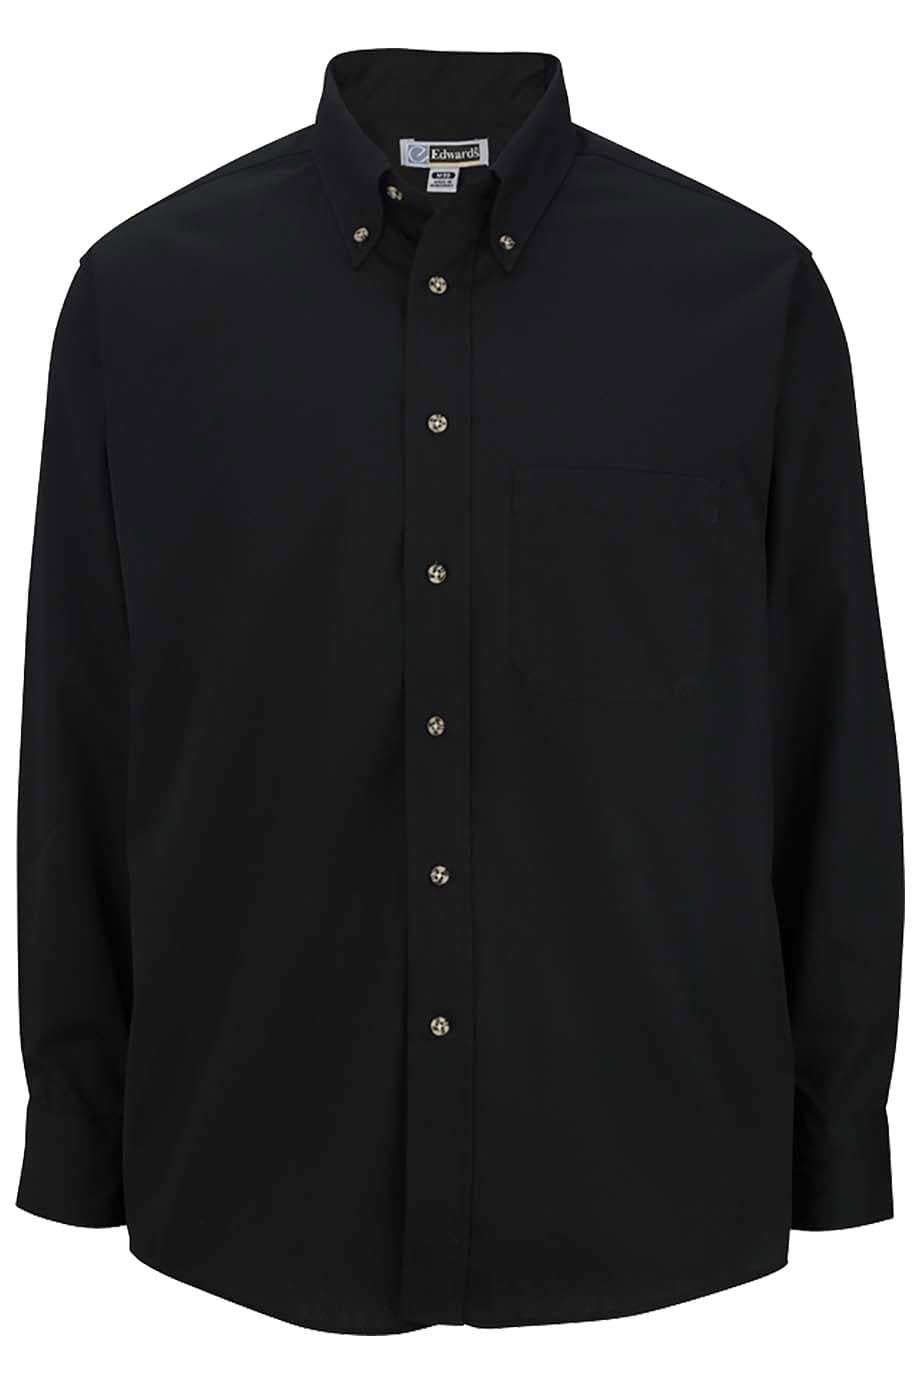 Ed Garments Men's Long Sleeve Button Down Poplin Shirt, BLACK, XX-Large ...